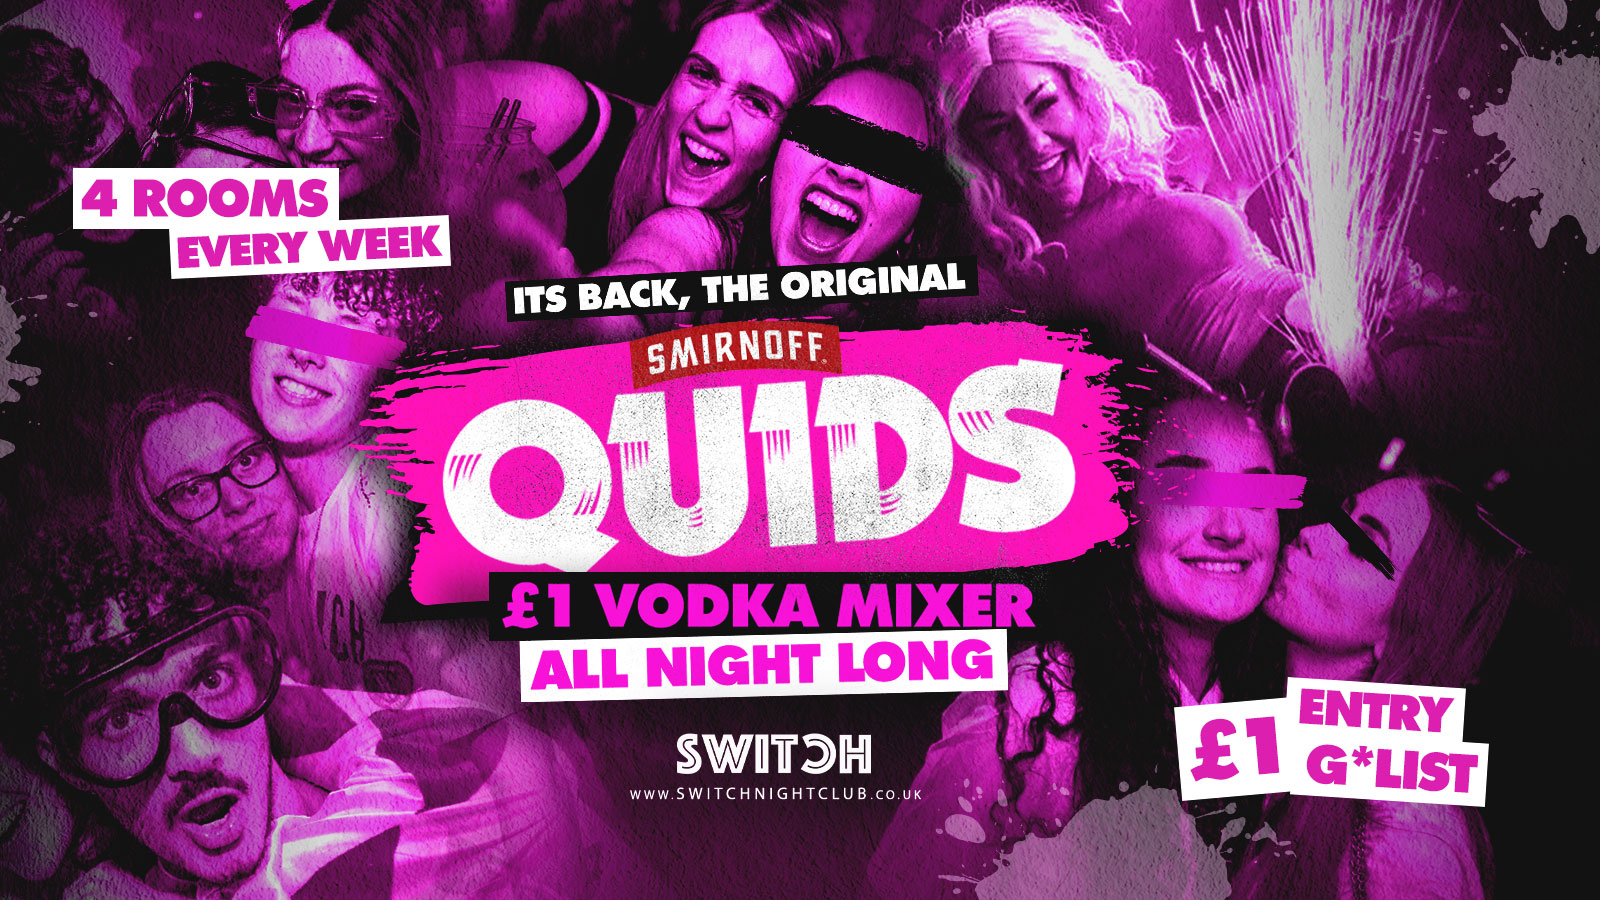 QUIDS | The Original £1 Vodka Mixer All Night is BACK! + £1 G*List